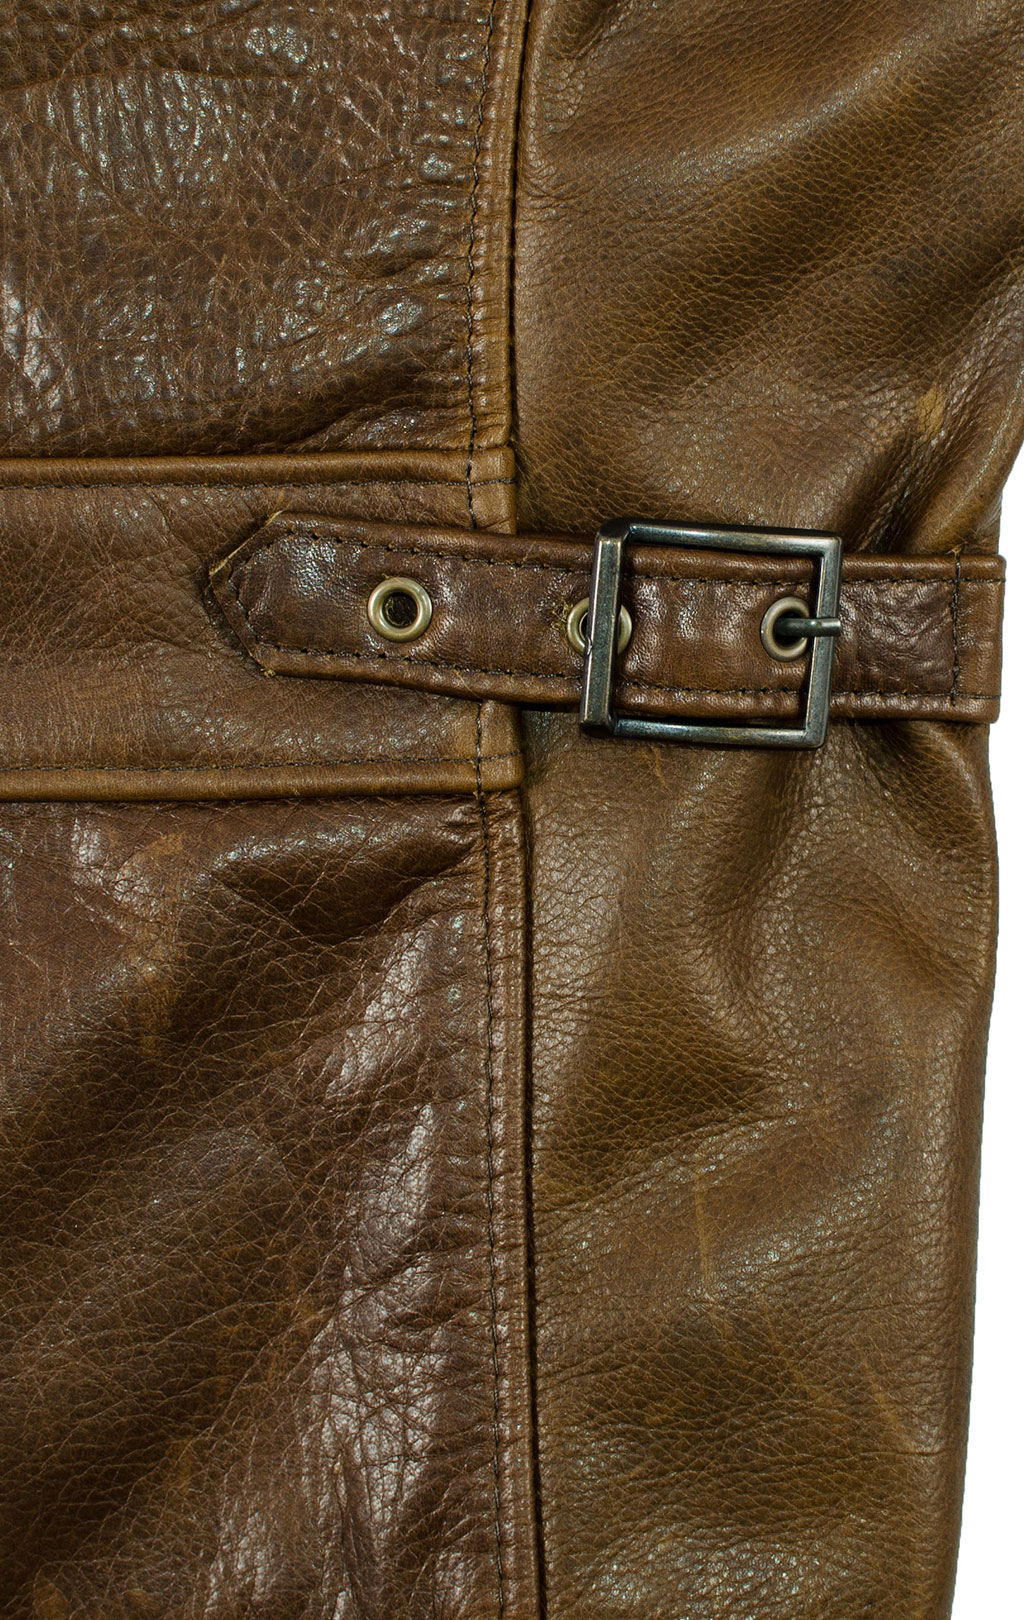 Куртка SCHOTT NYC Waxy Cowhide Leather DELIVERY JCT 27 кожа brown (563) 